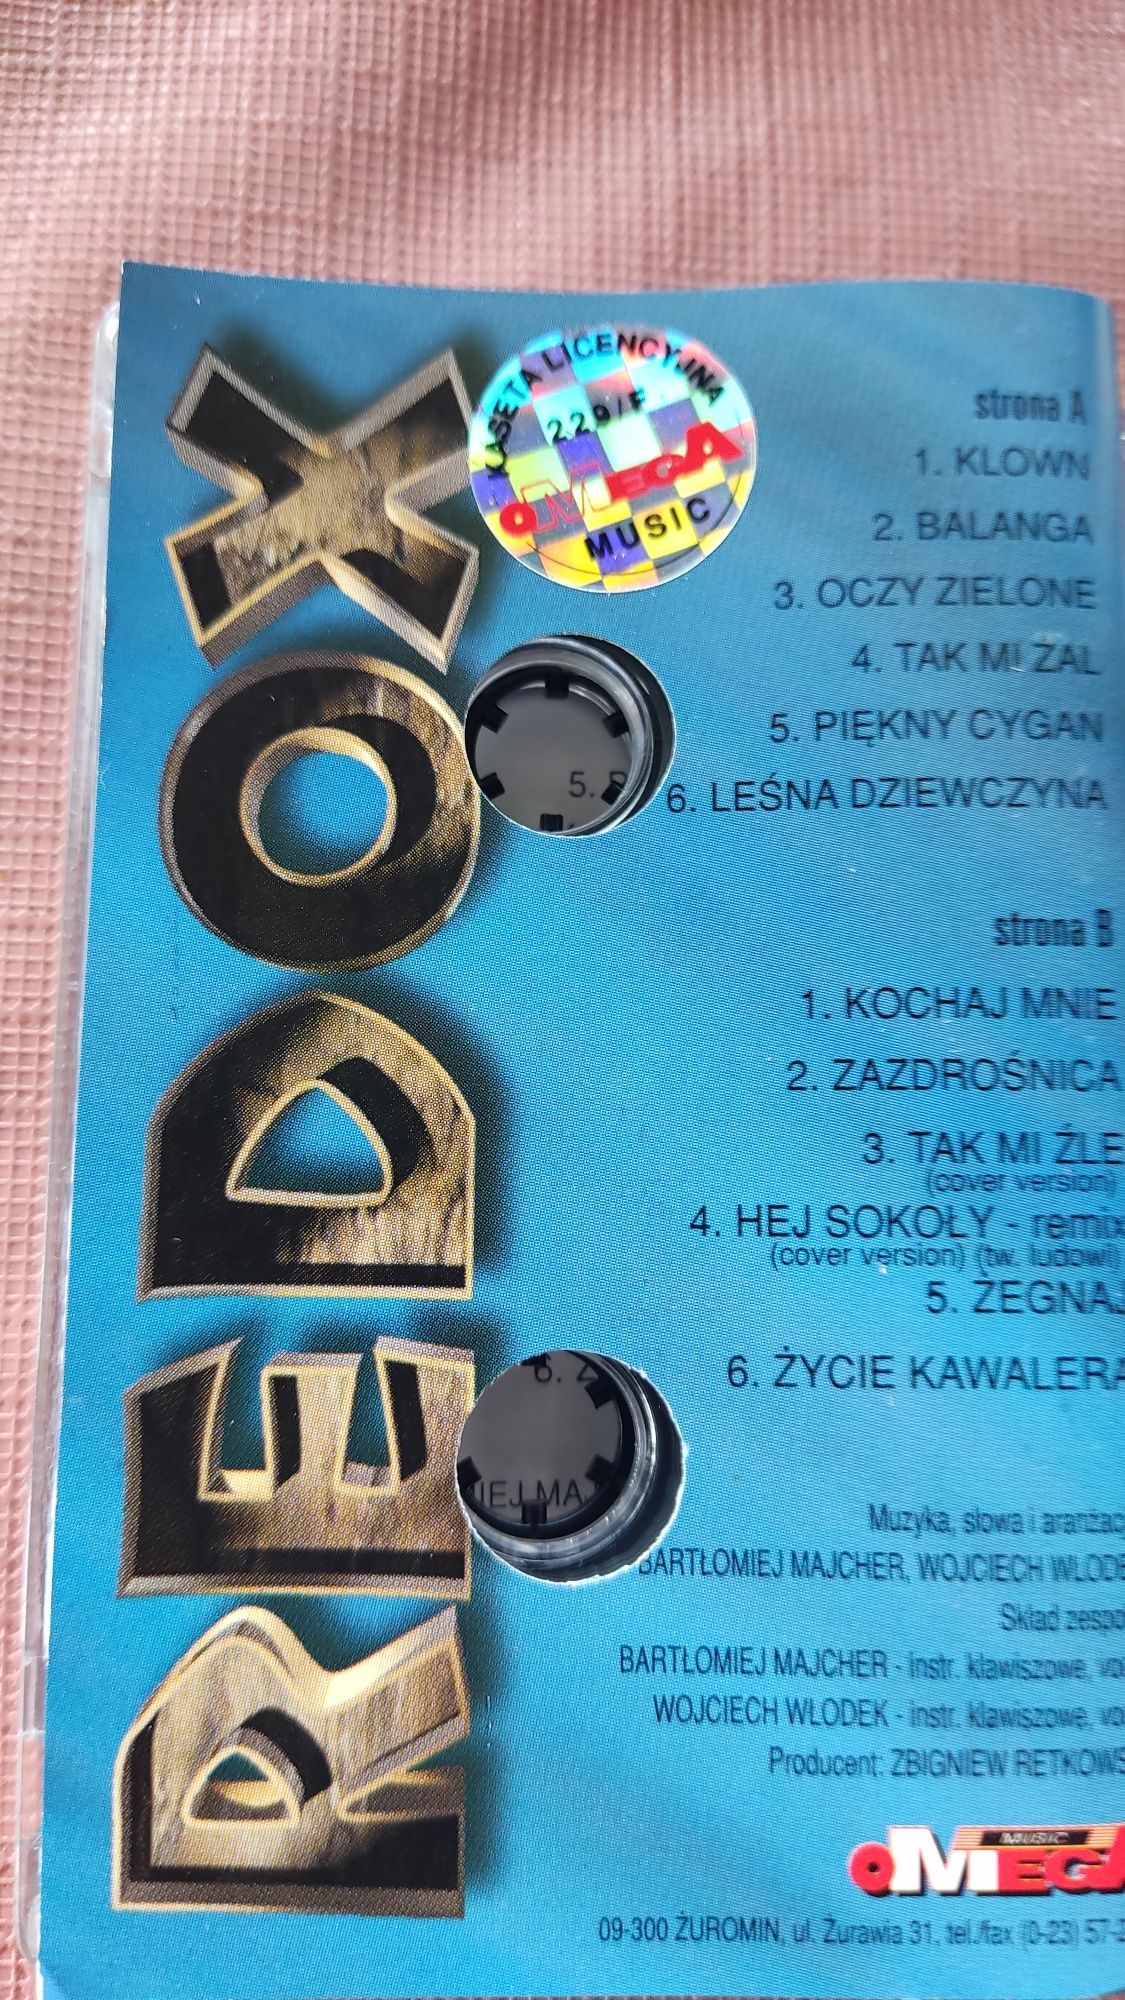 Omega music Redox życia kawelera kaseta disco polo